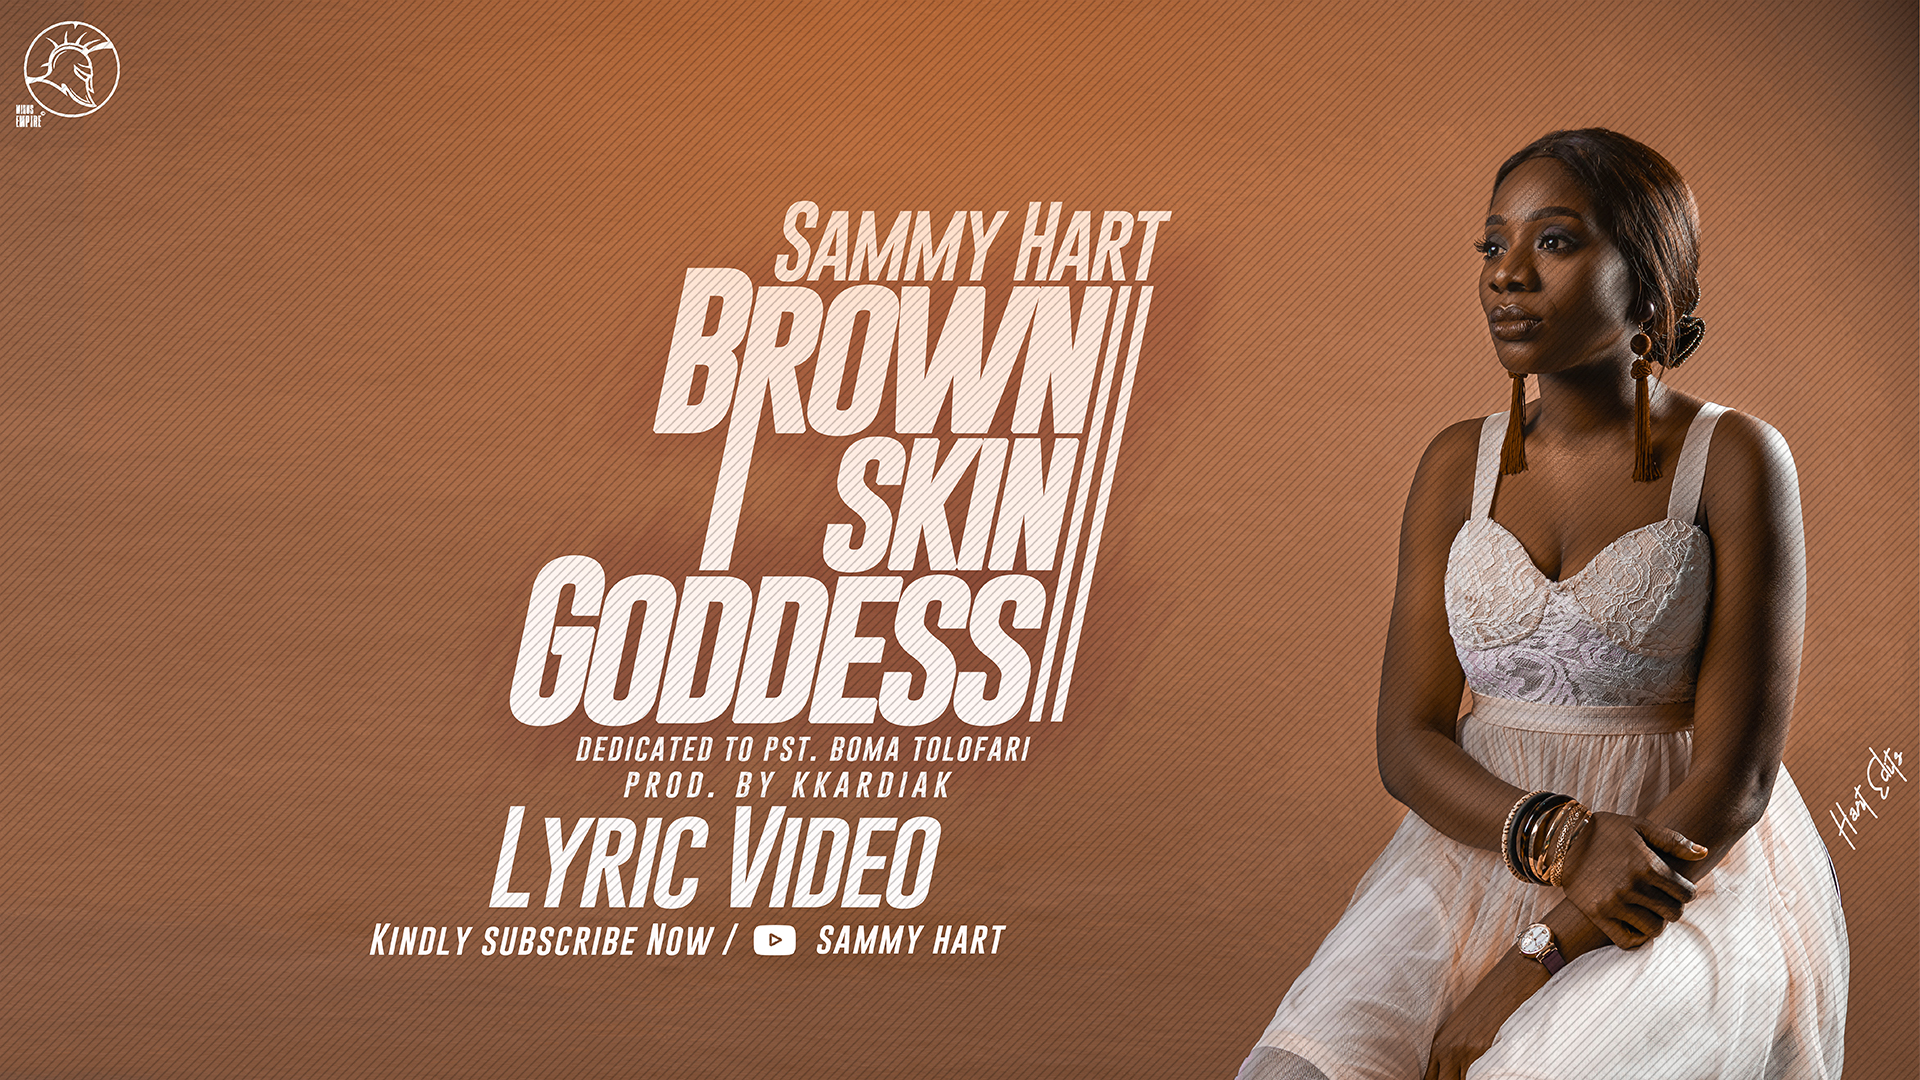 NEW MUSIC: Brown Skin Goddess by Sammy hart - Mirus Empire Gist1920 x 1080